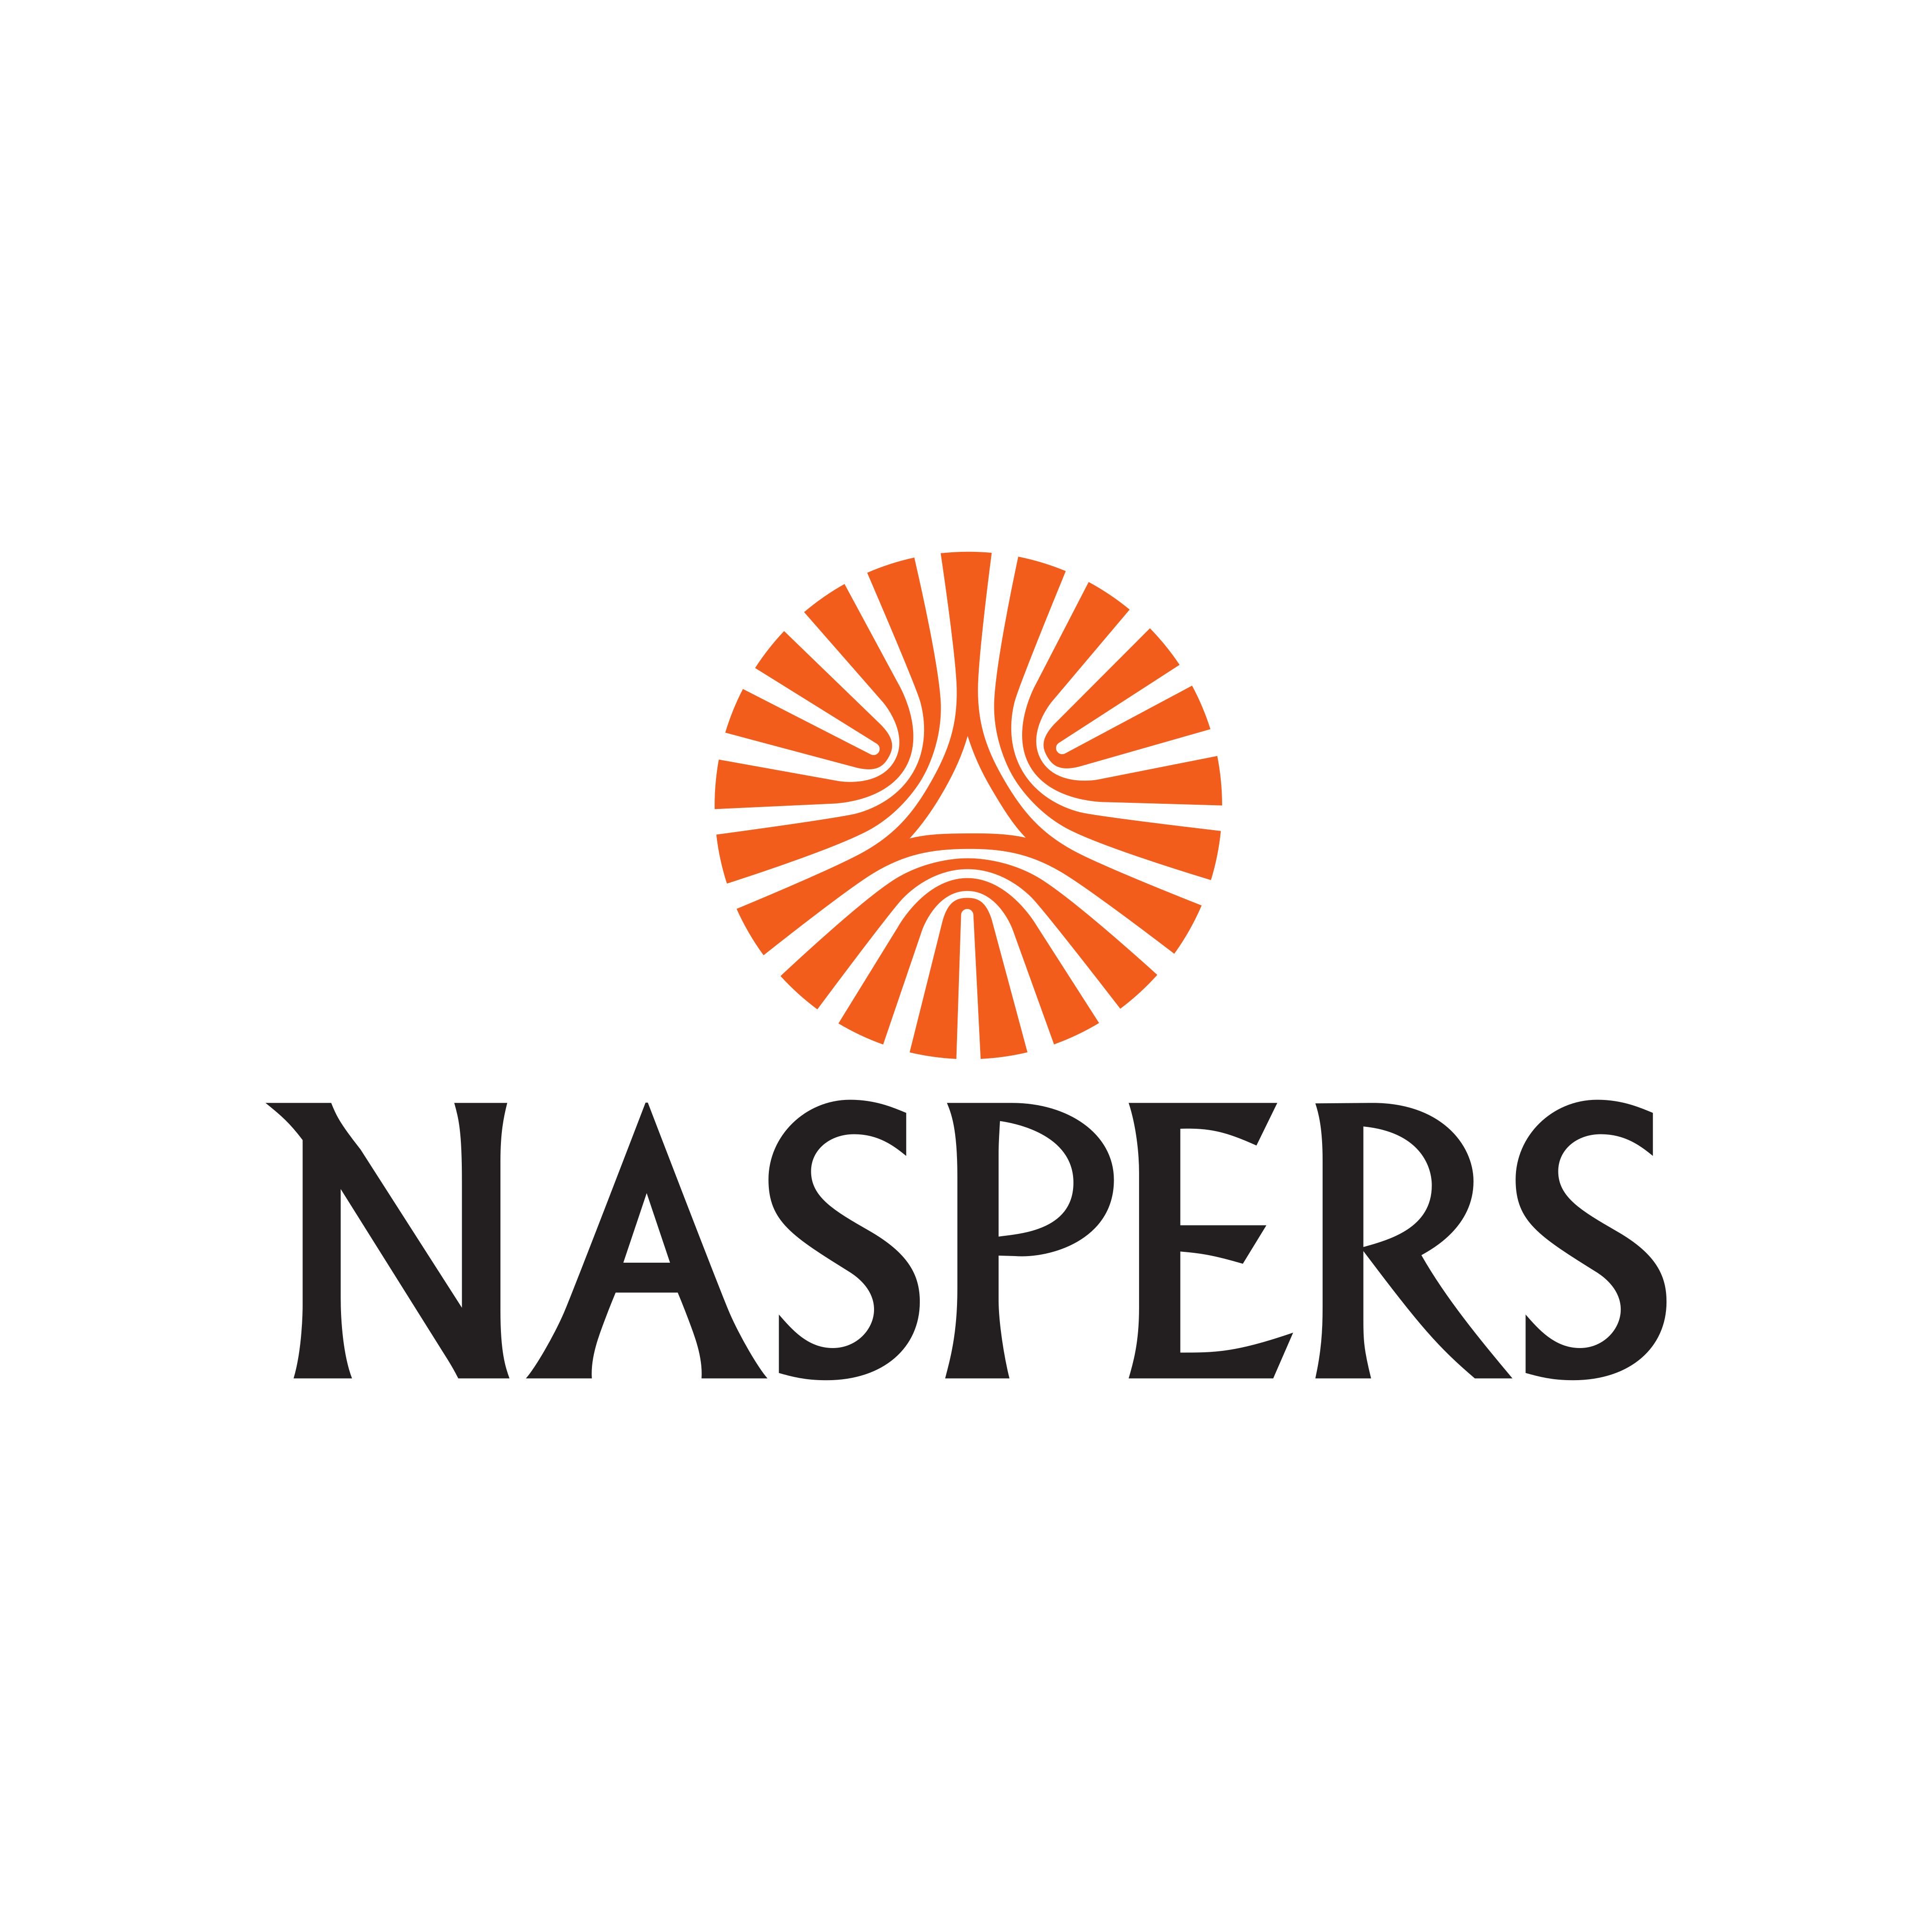 naspers logo 0 - Naspers Logo